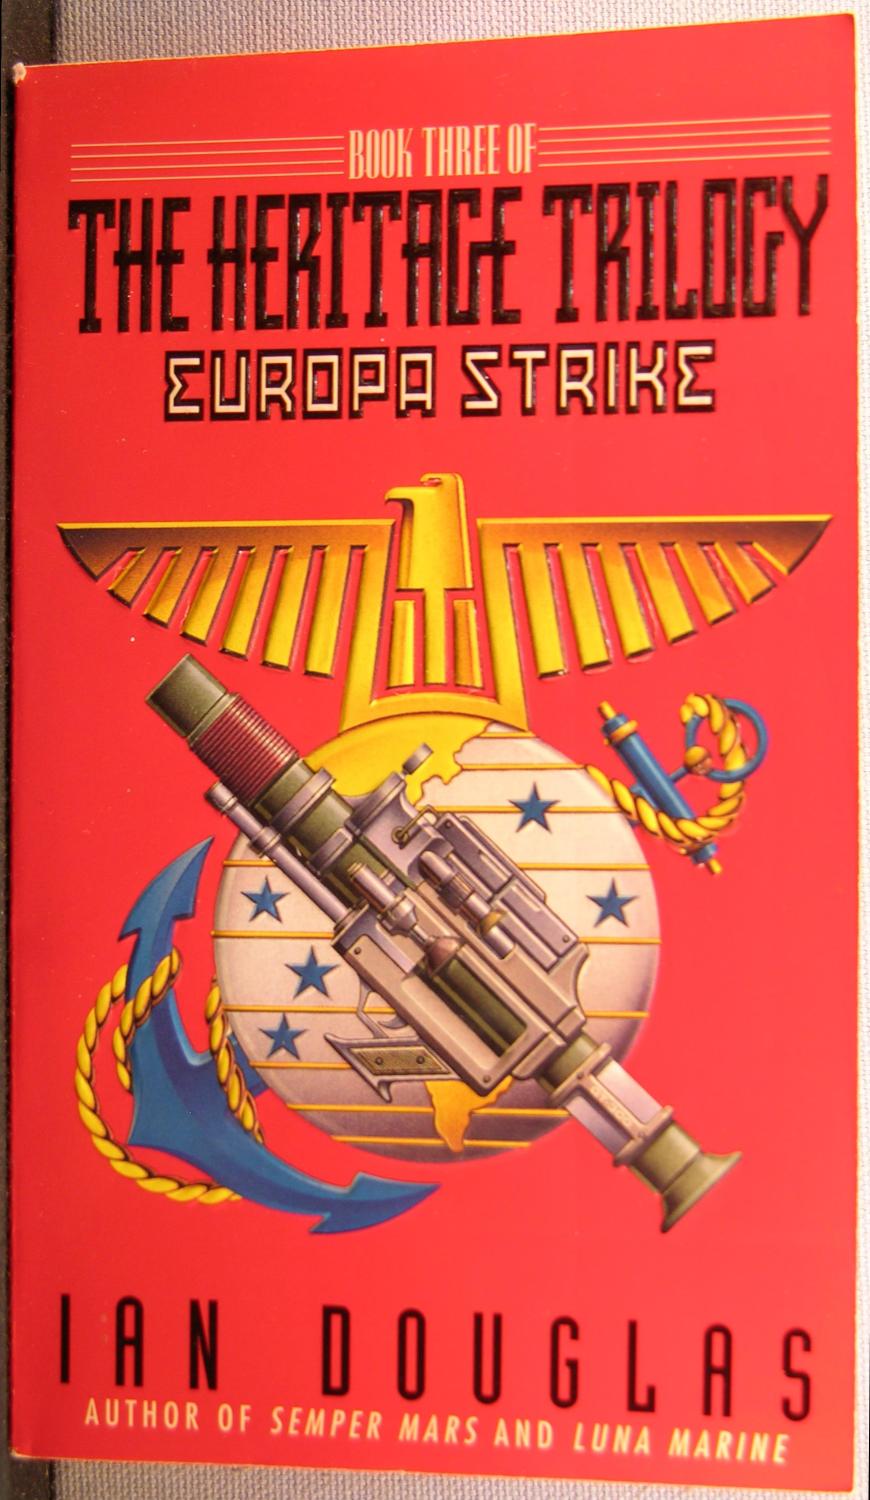 Europa Strike [Marines in Space / Galactic Marines: Heritage Trilogy #3] - William H. Keith, Jr. (as Ian Douglas)